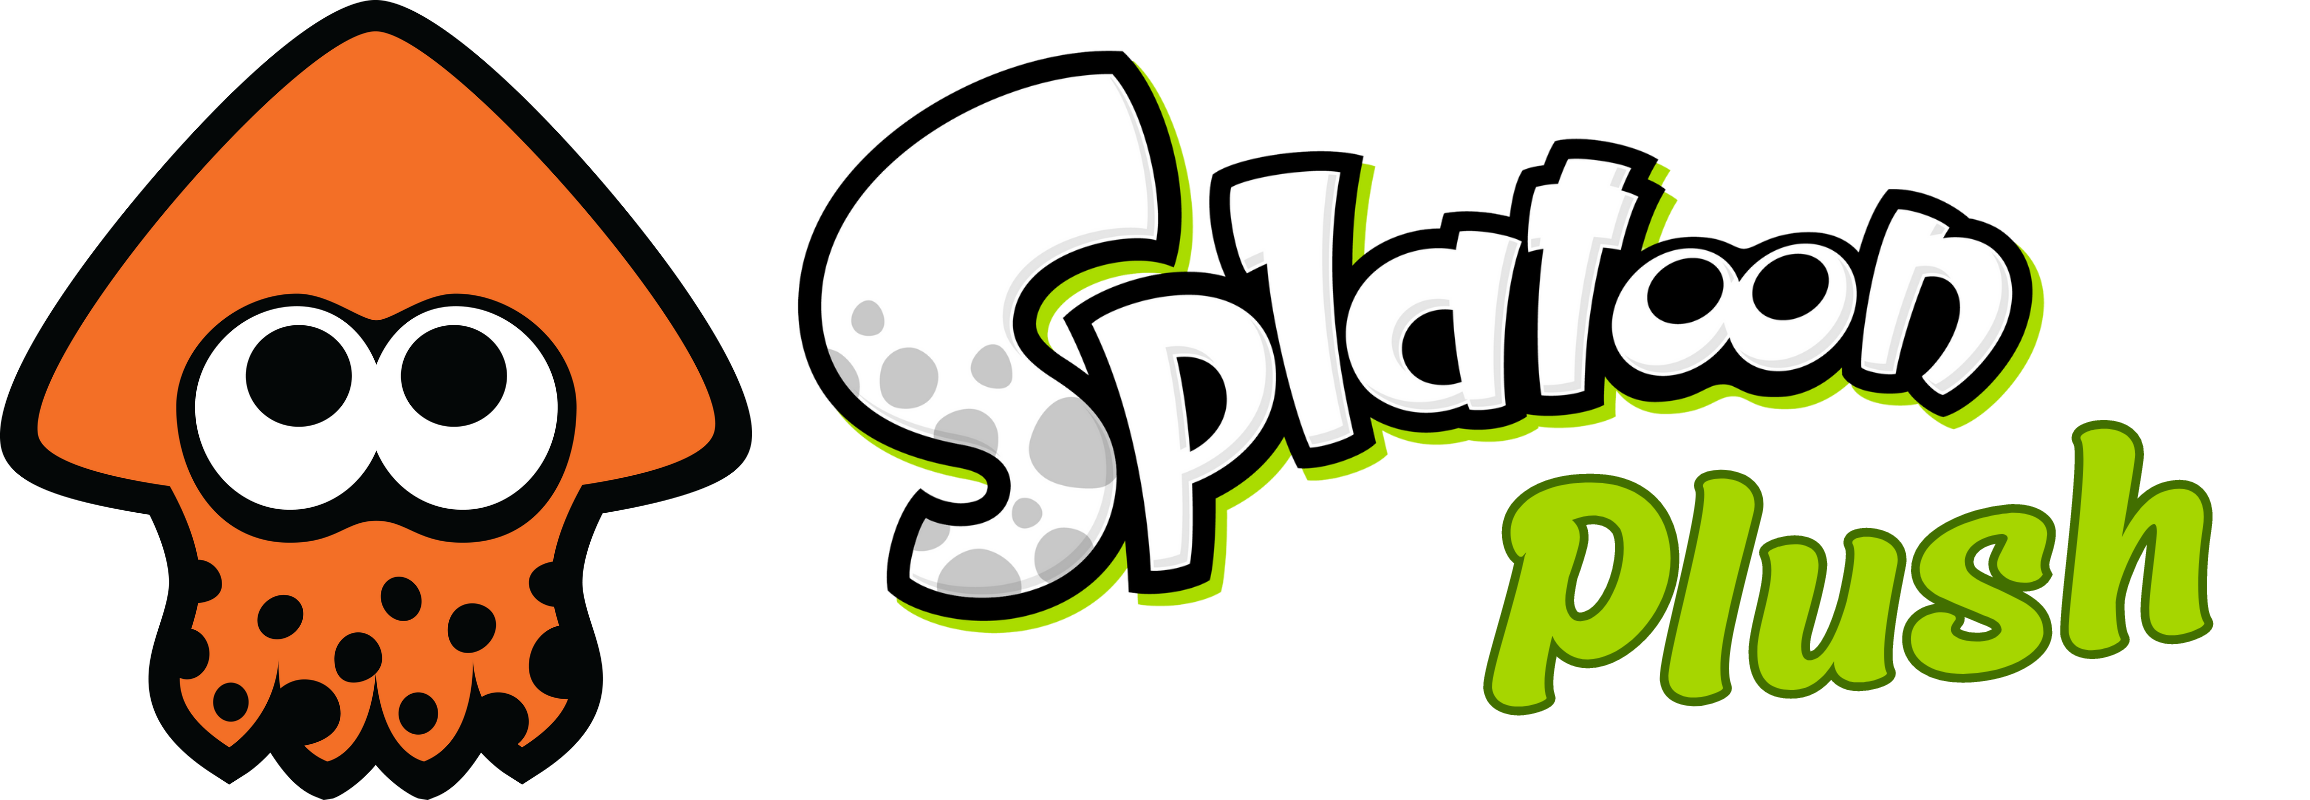 Logo 1 - Splatoon Plush